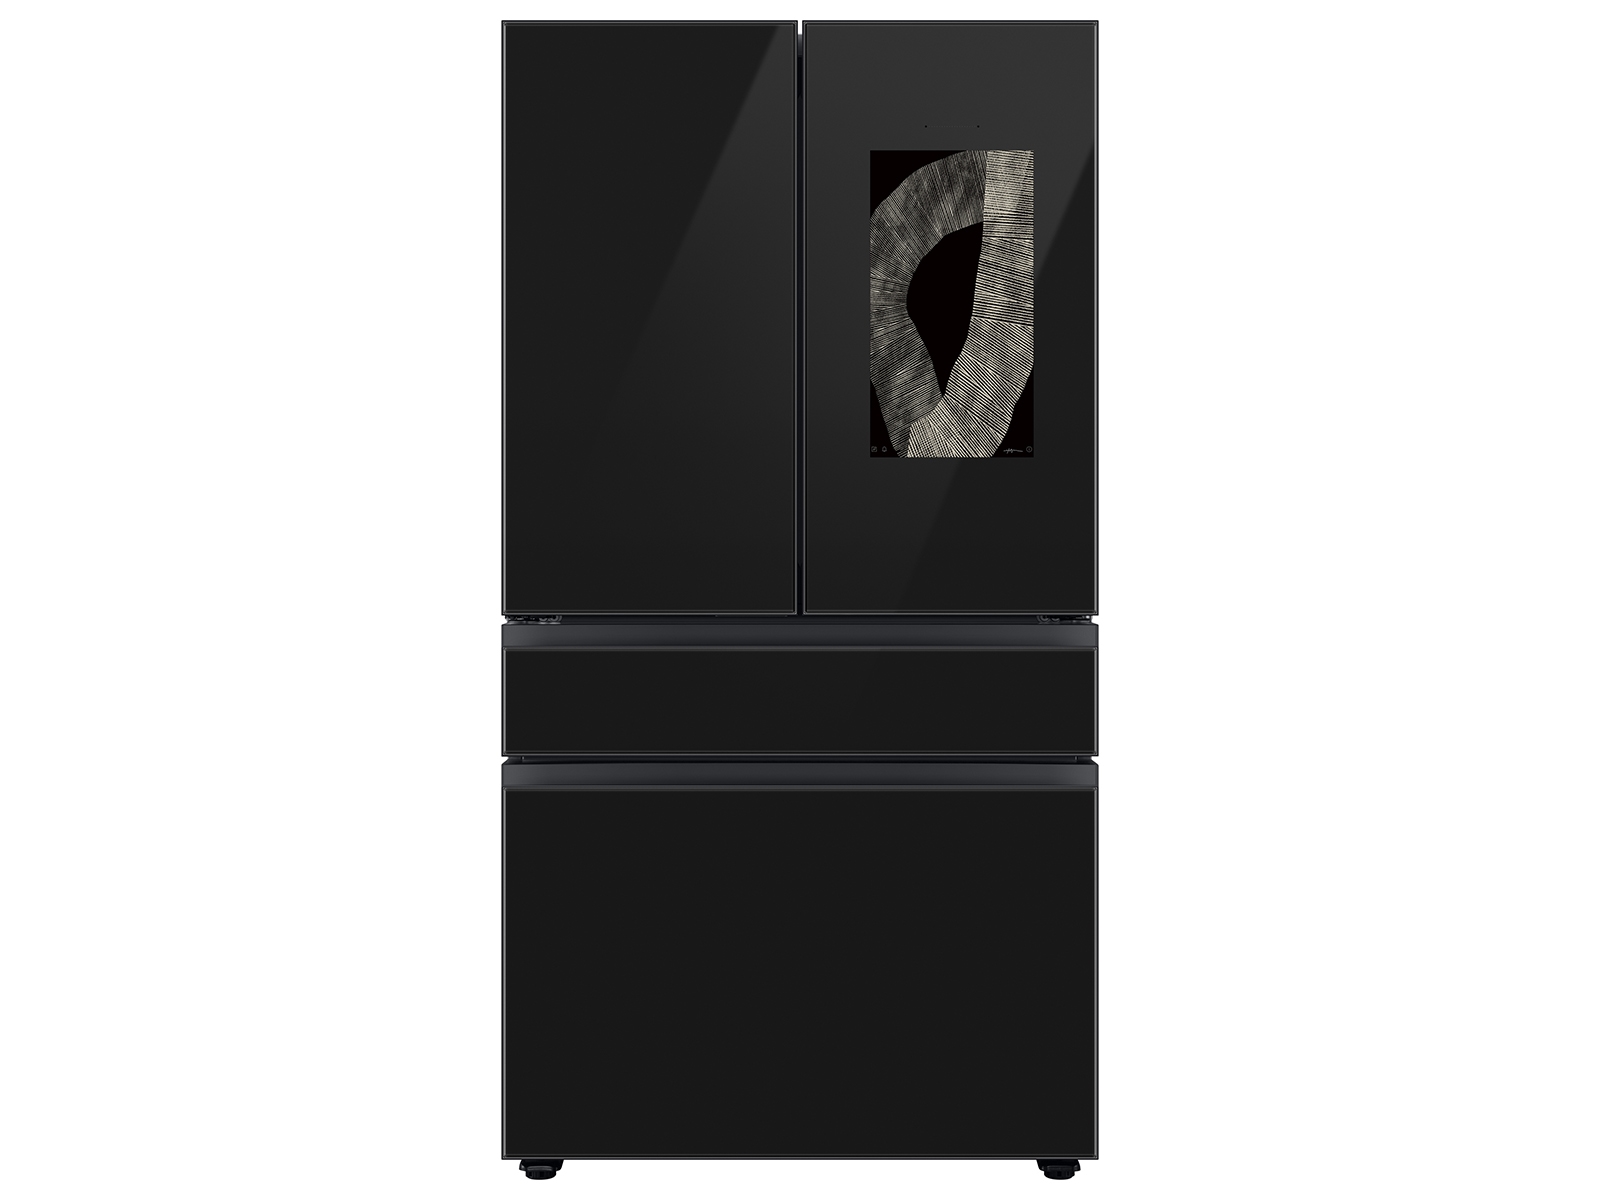 Samsung Bespoke 4-Door French Door Refrigerator (29 cu. ft.) - with Family Hub™ Panel in Charcoal Glass - (with Customizable Door Panel Colors) in Charcoal Glass